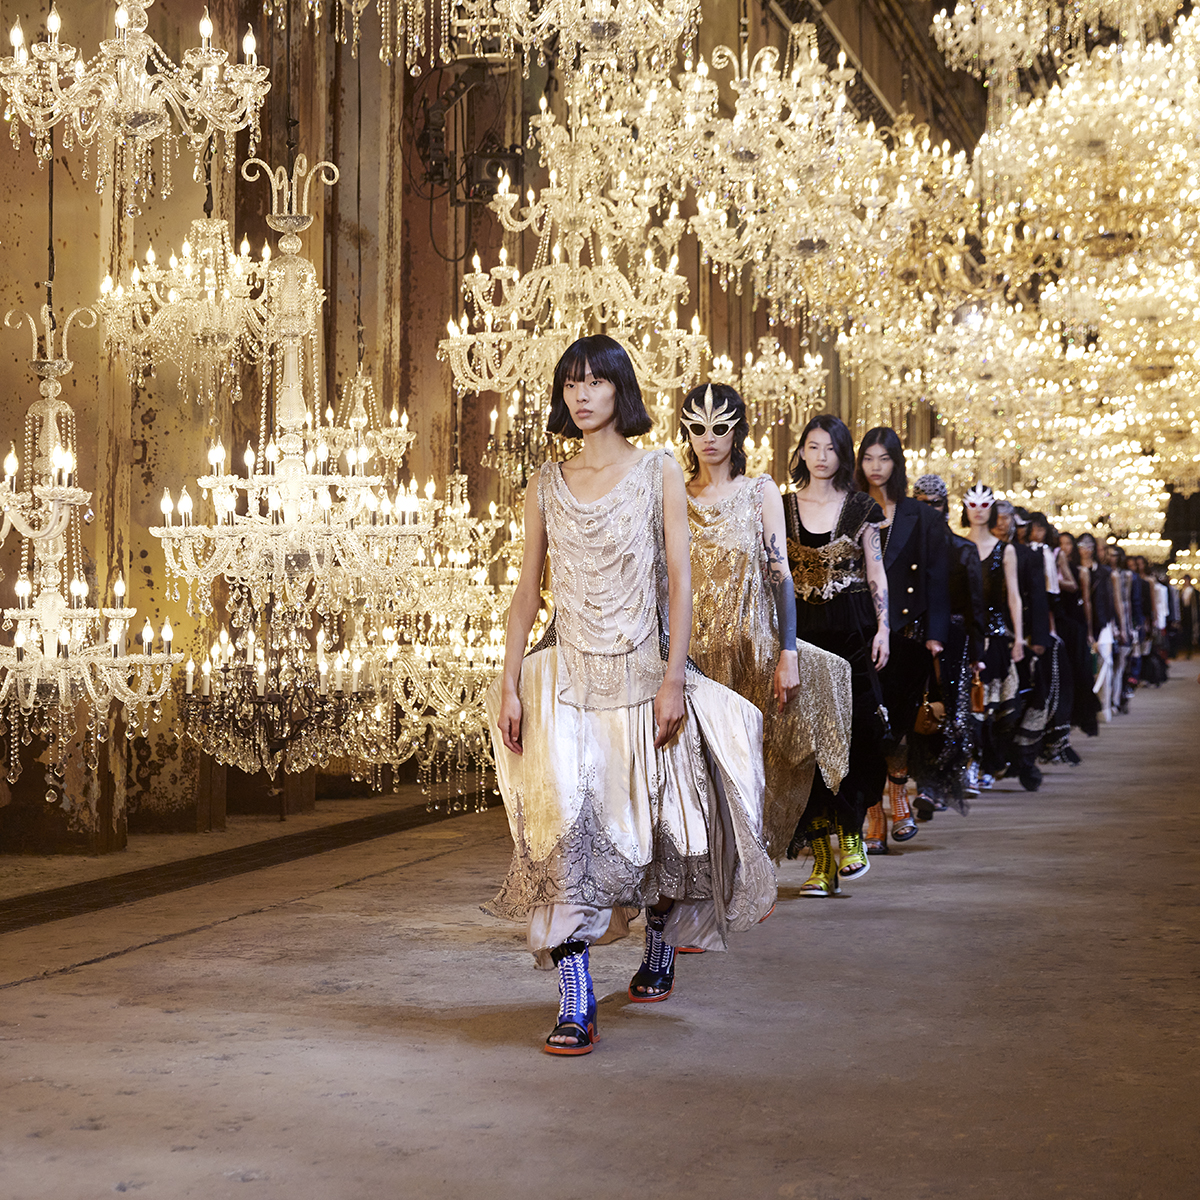 From Milan to Paris, LVMH Fashion Maisons unveil women's